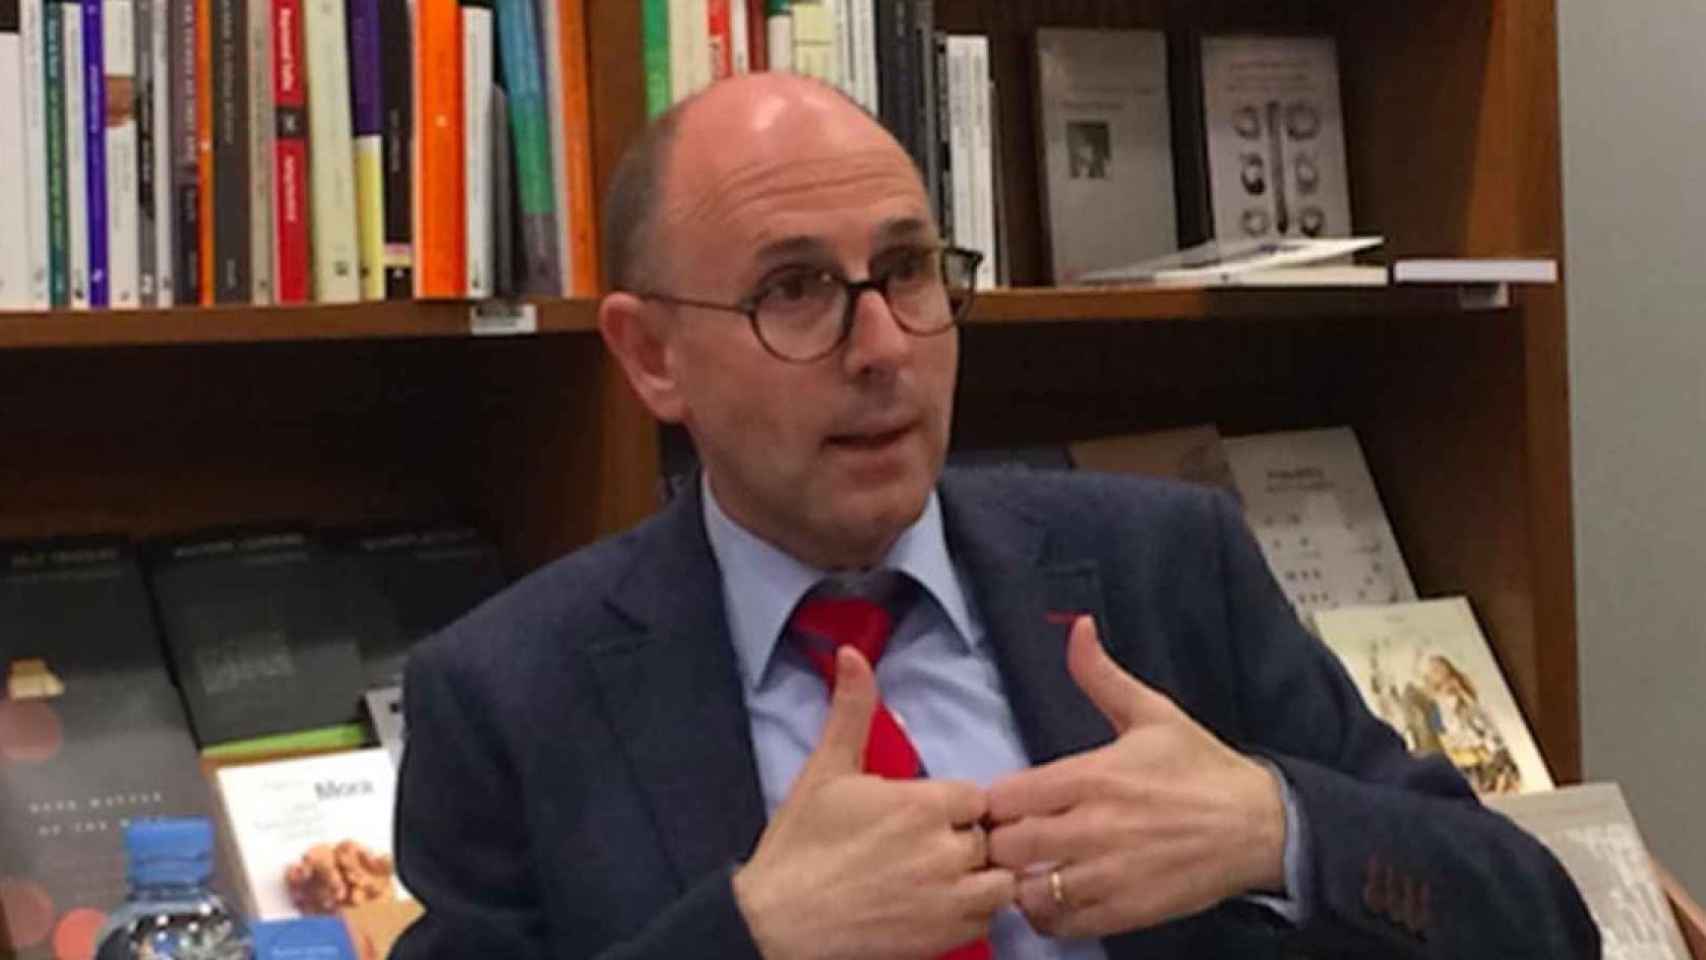 El catedrático de Derecho Constitucional, Josep Maria Castellà